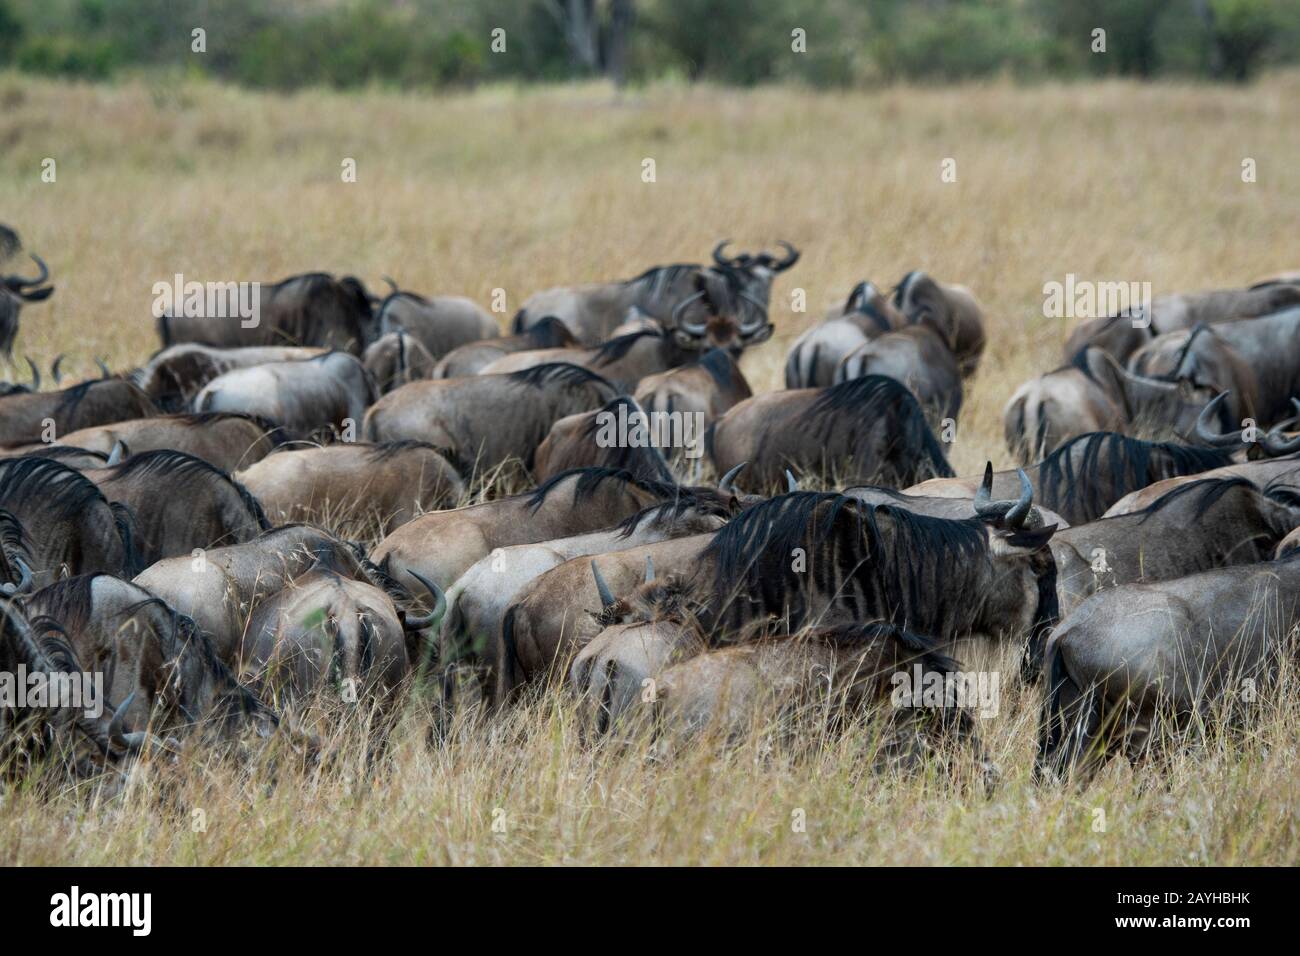 Wildebeests, also called gnus or wildebai, migrating through the grasslands towards the Mara River in the Masai Mara in Kenya. Stock Photo